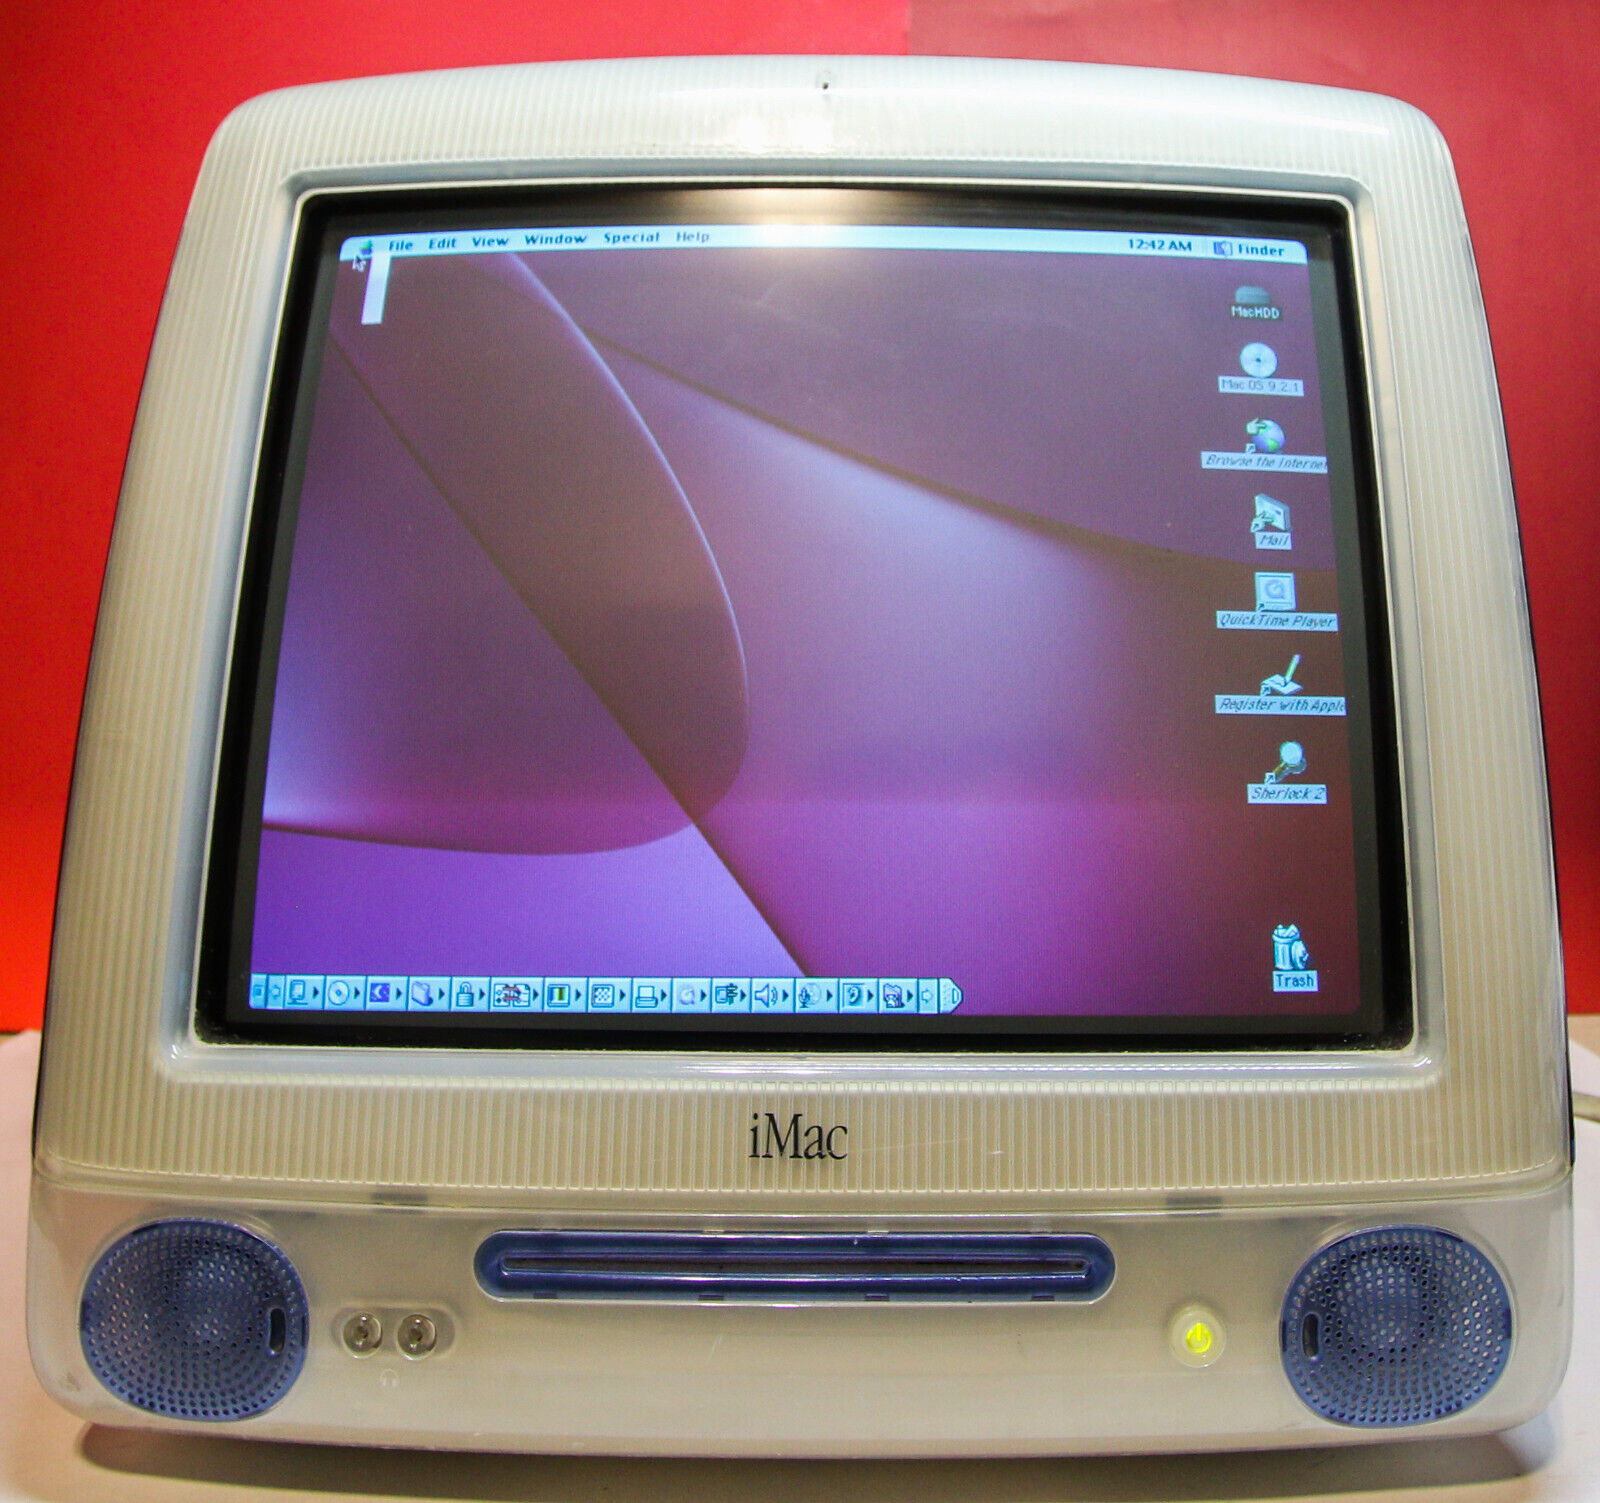 Apple iMac Vintage Computer 450MHz PPC G3 M5521 OS 9.2 128MB RAM ~ RARE EDITION